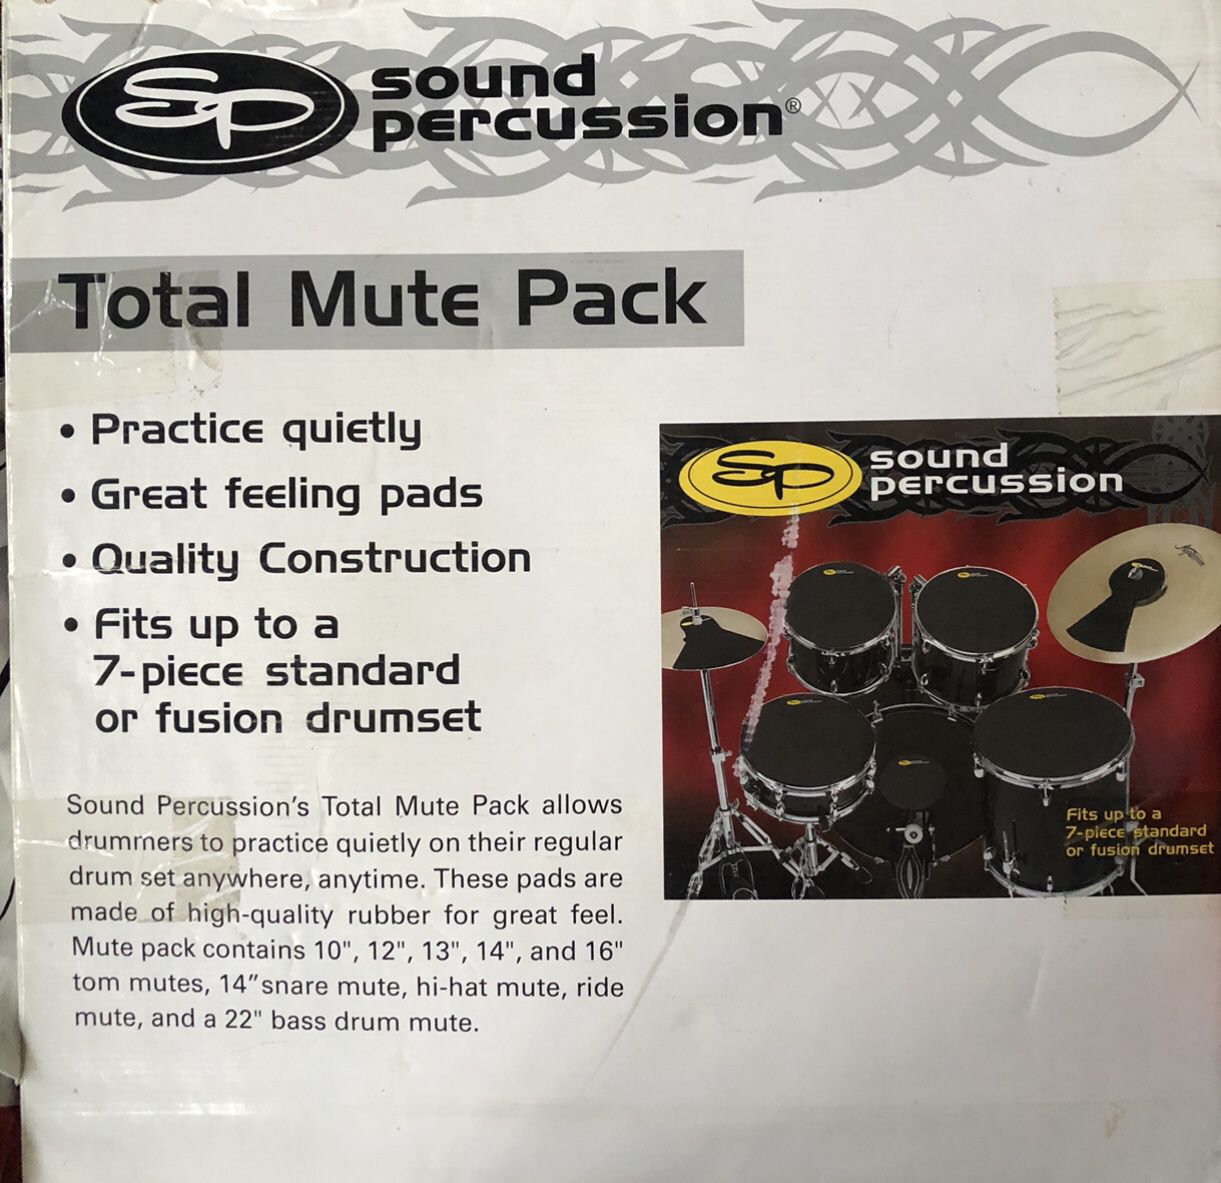 Drum pads 7-Piece standard or Fusion drum set